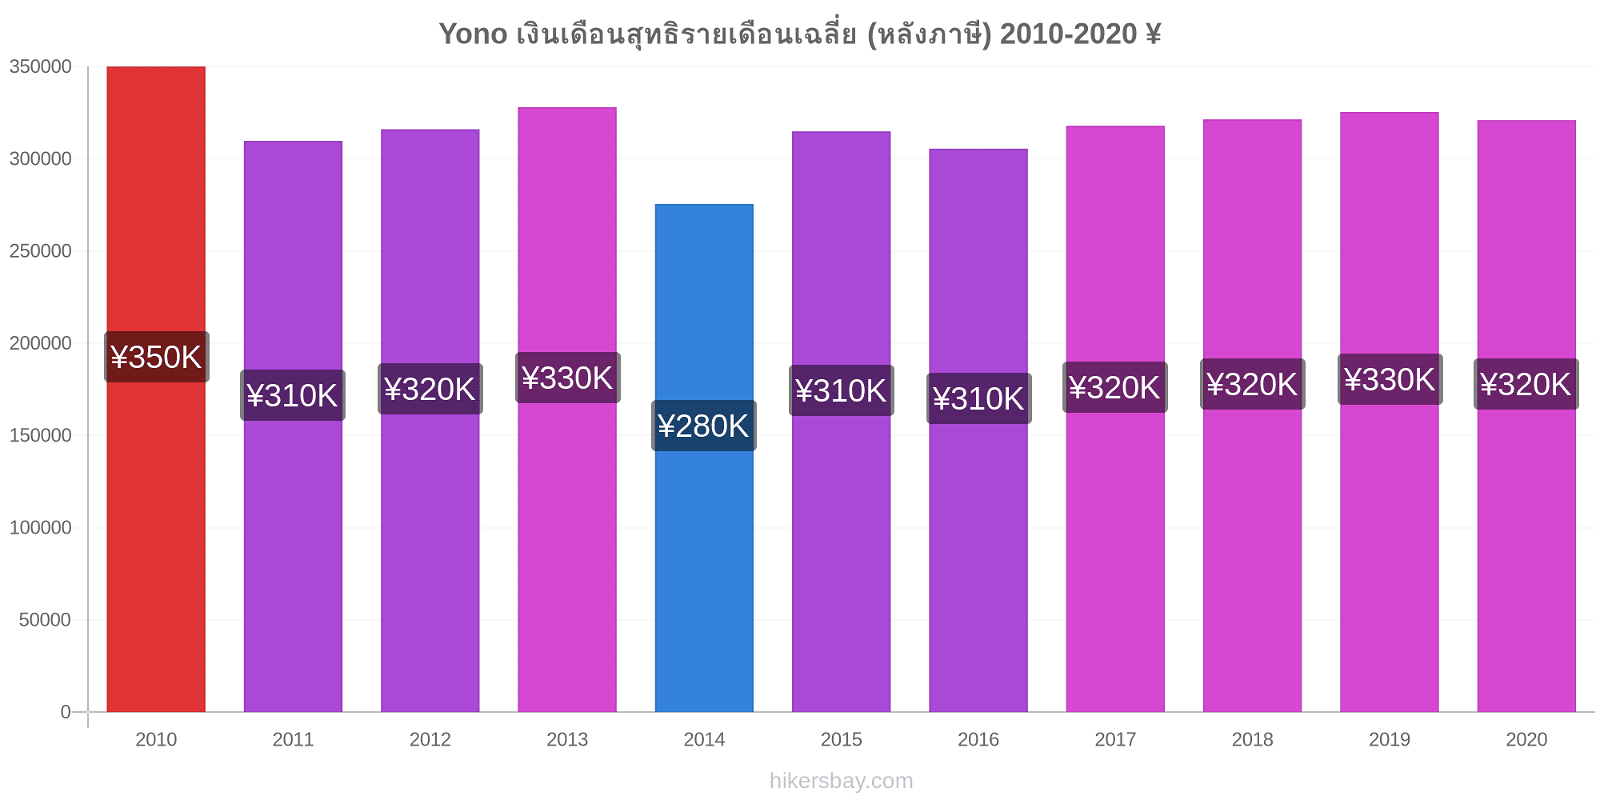 Yono การเปลี่ยนแปลงราคา เงินเดือนสุทธิรายเดือนเฉลี่ย (หลังภาษี) hikersbay.com